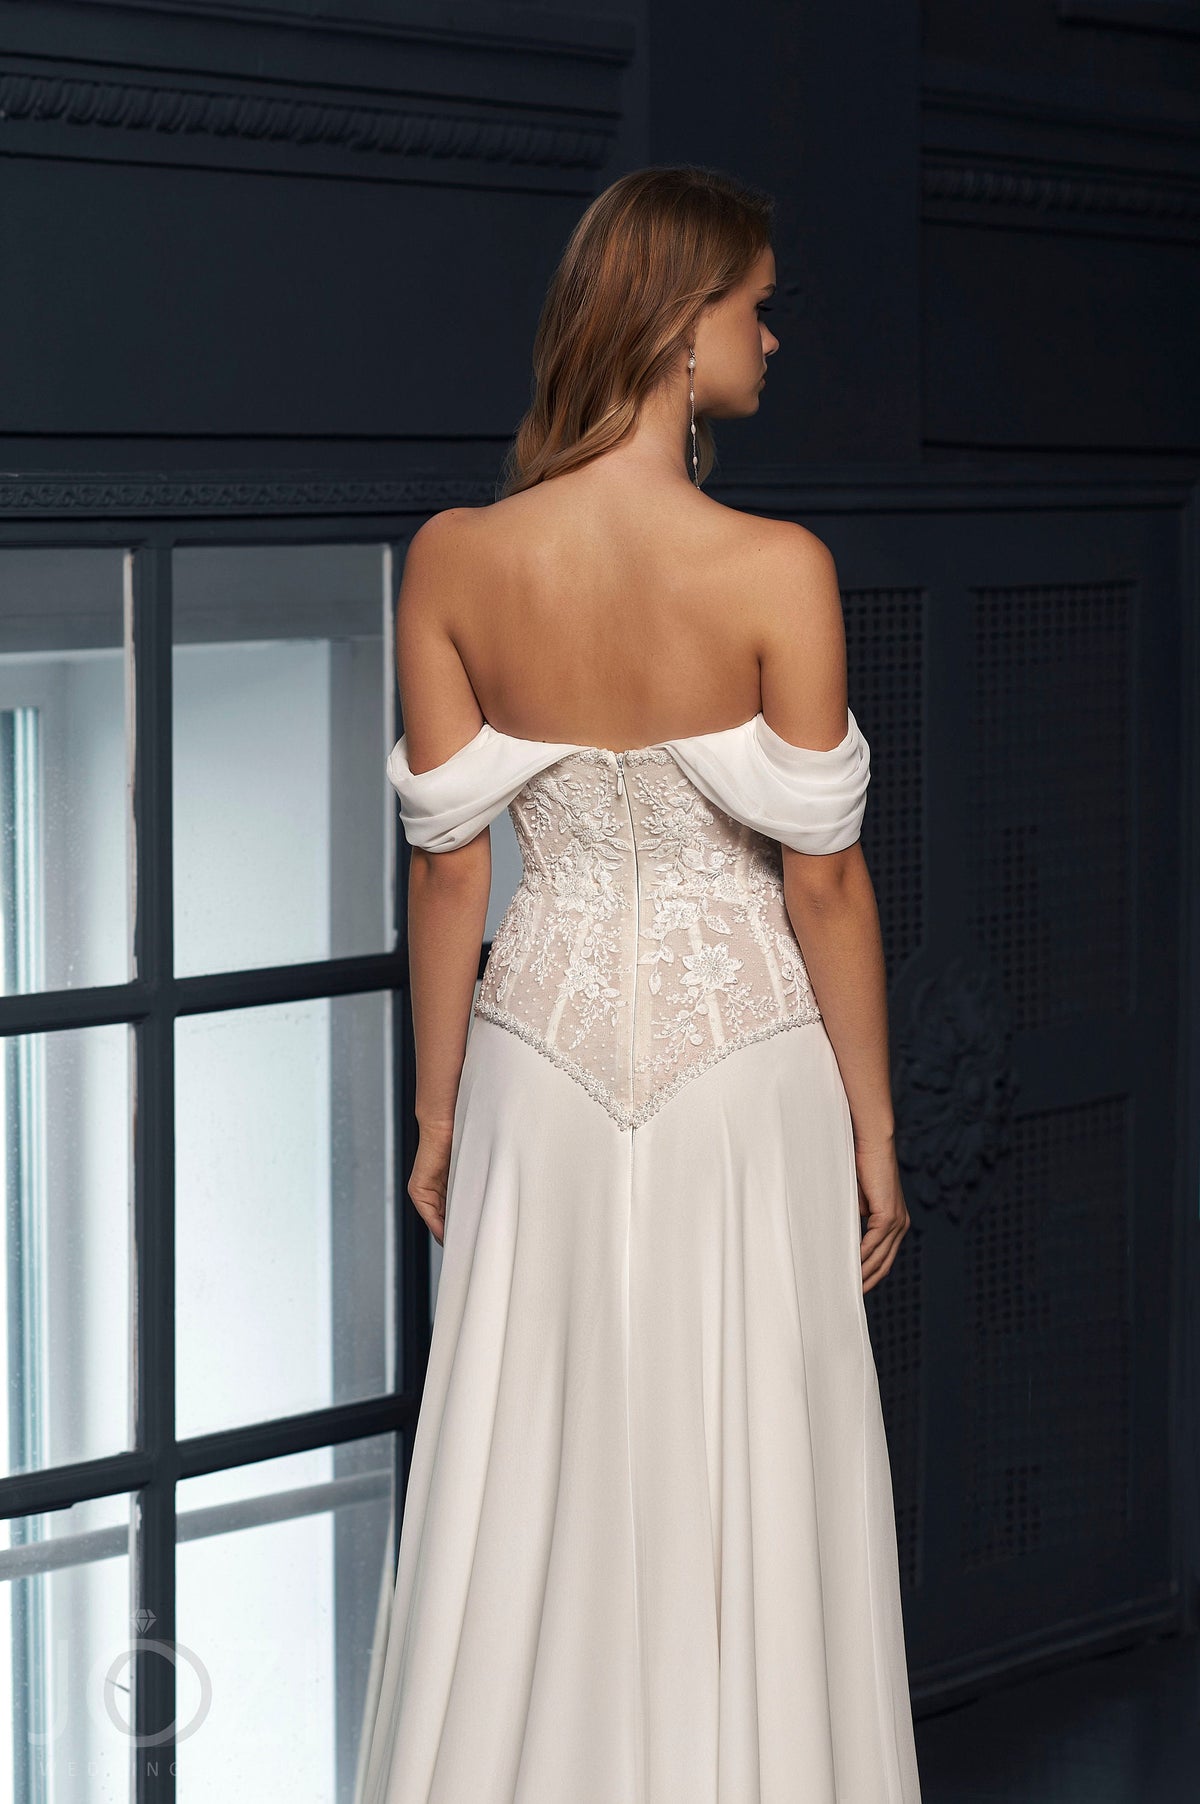 Romantic Floral Lace Side Slit Aline Off the Shoulder Detachable Long Bell Sleeves Open Back Wedding Dress Bridal Gown Sweetheart Neckline